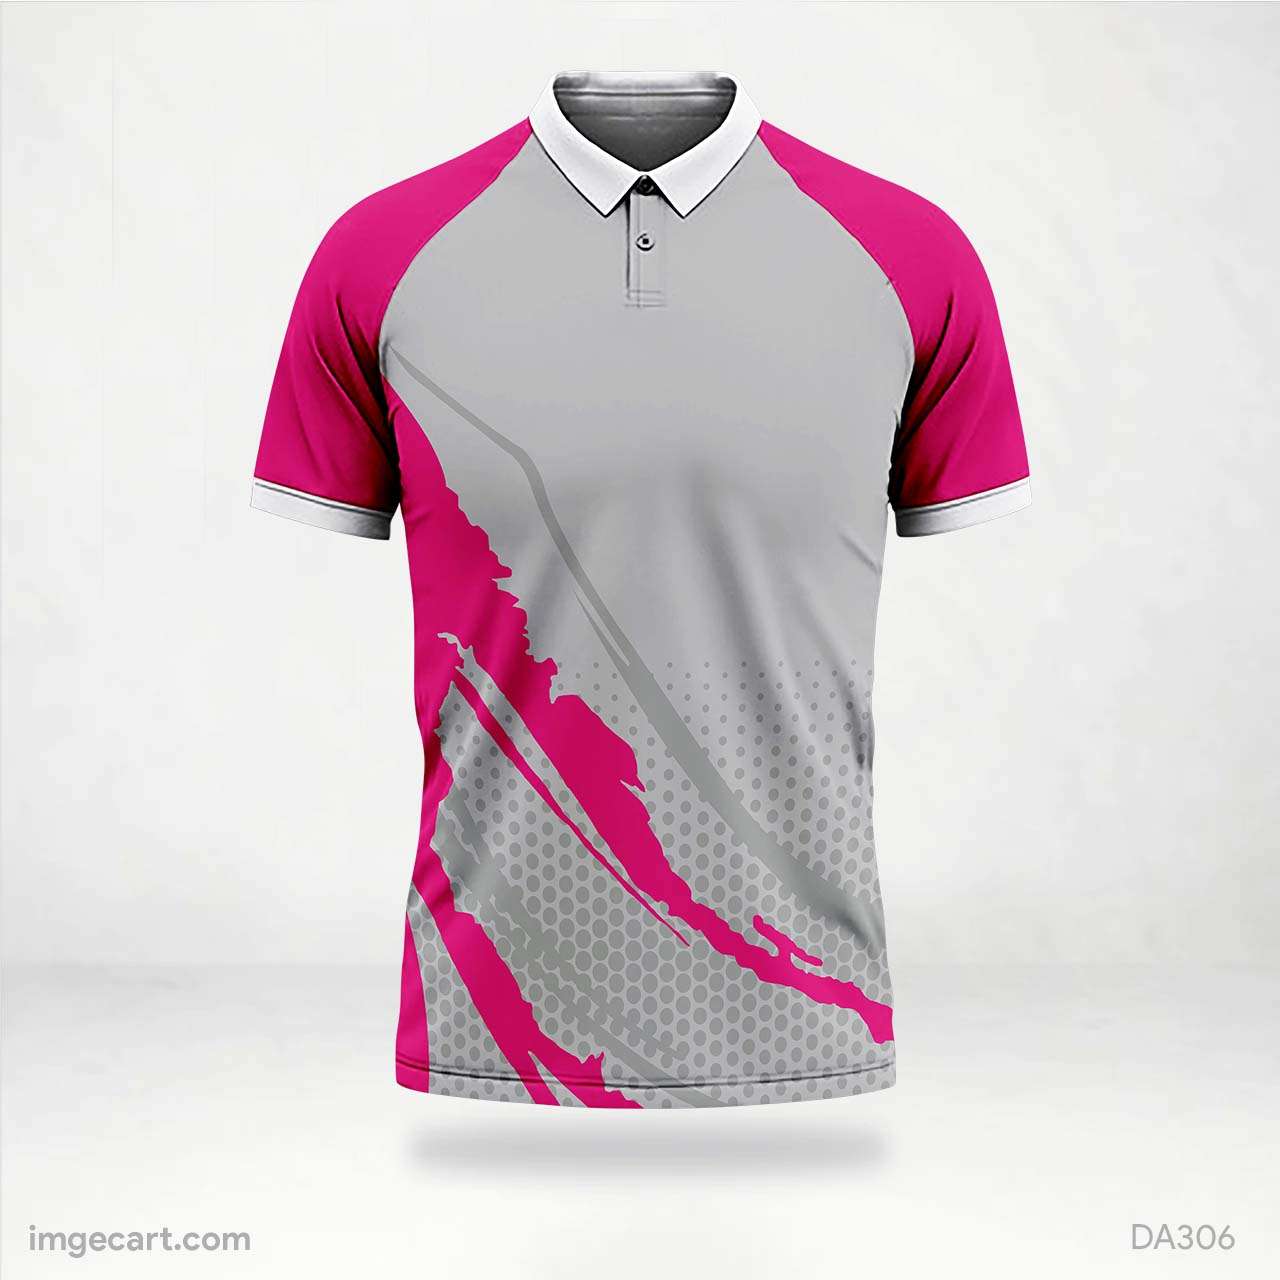 Cricket Jersey Design grey with pink pattern - imgecart